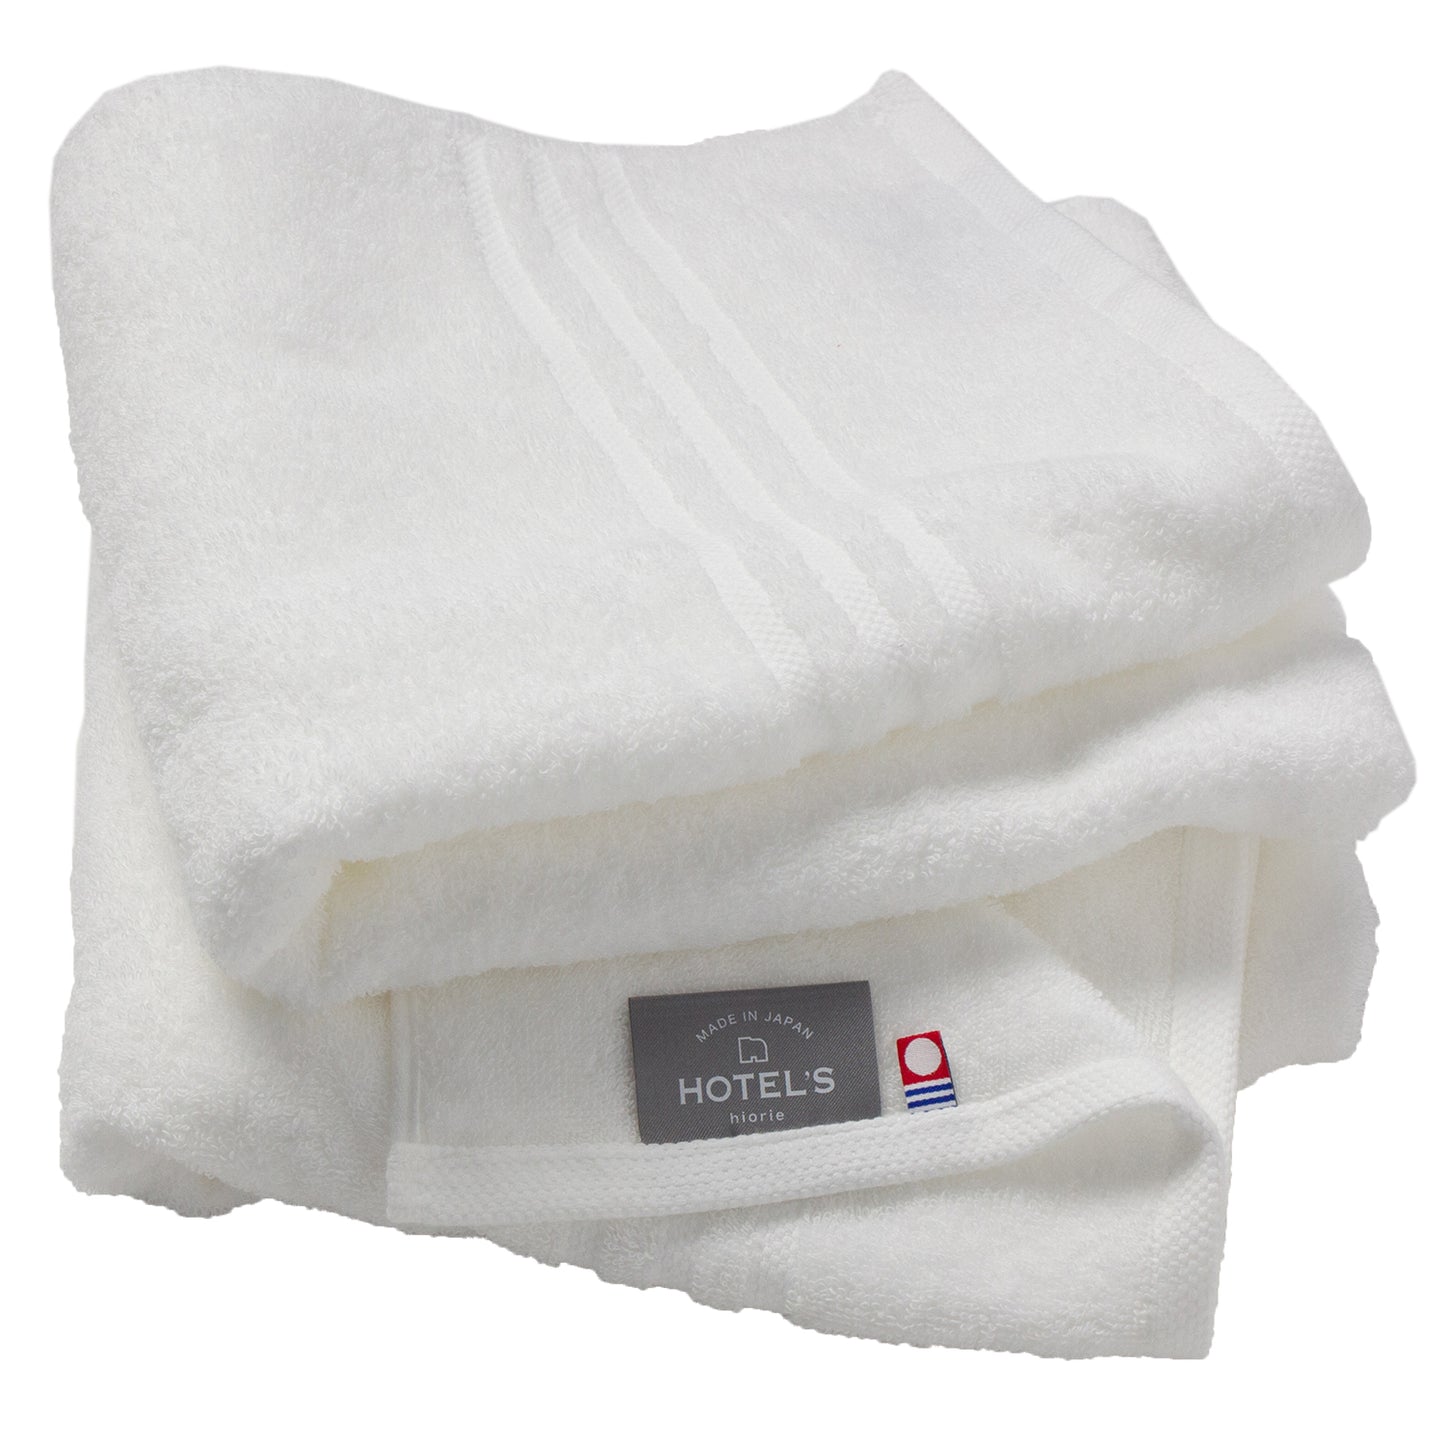 Hiorie Imabari Towel Soft Hotel's Fluffy Mini-Badetuch 2 Blatt Baumwolle Japan